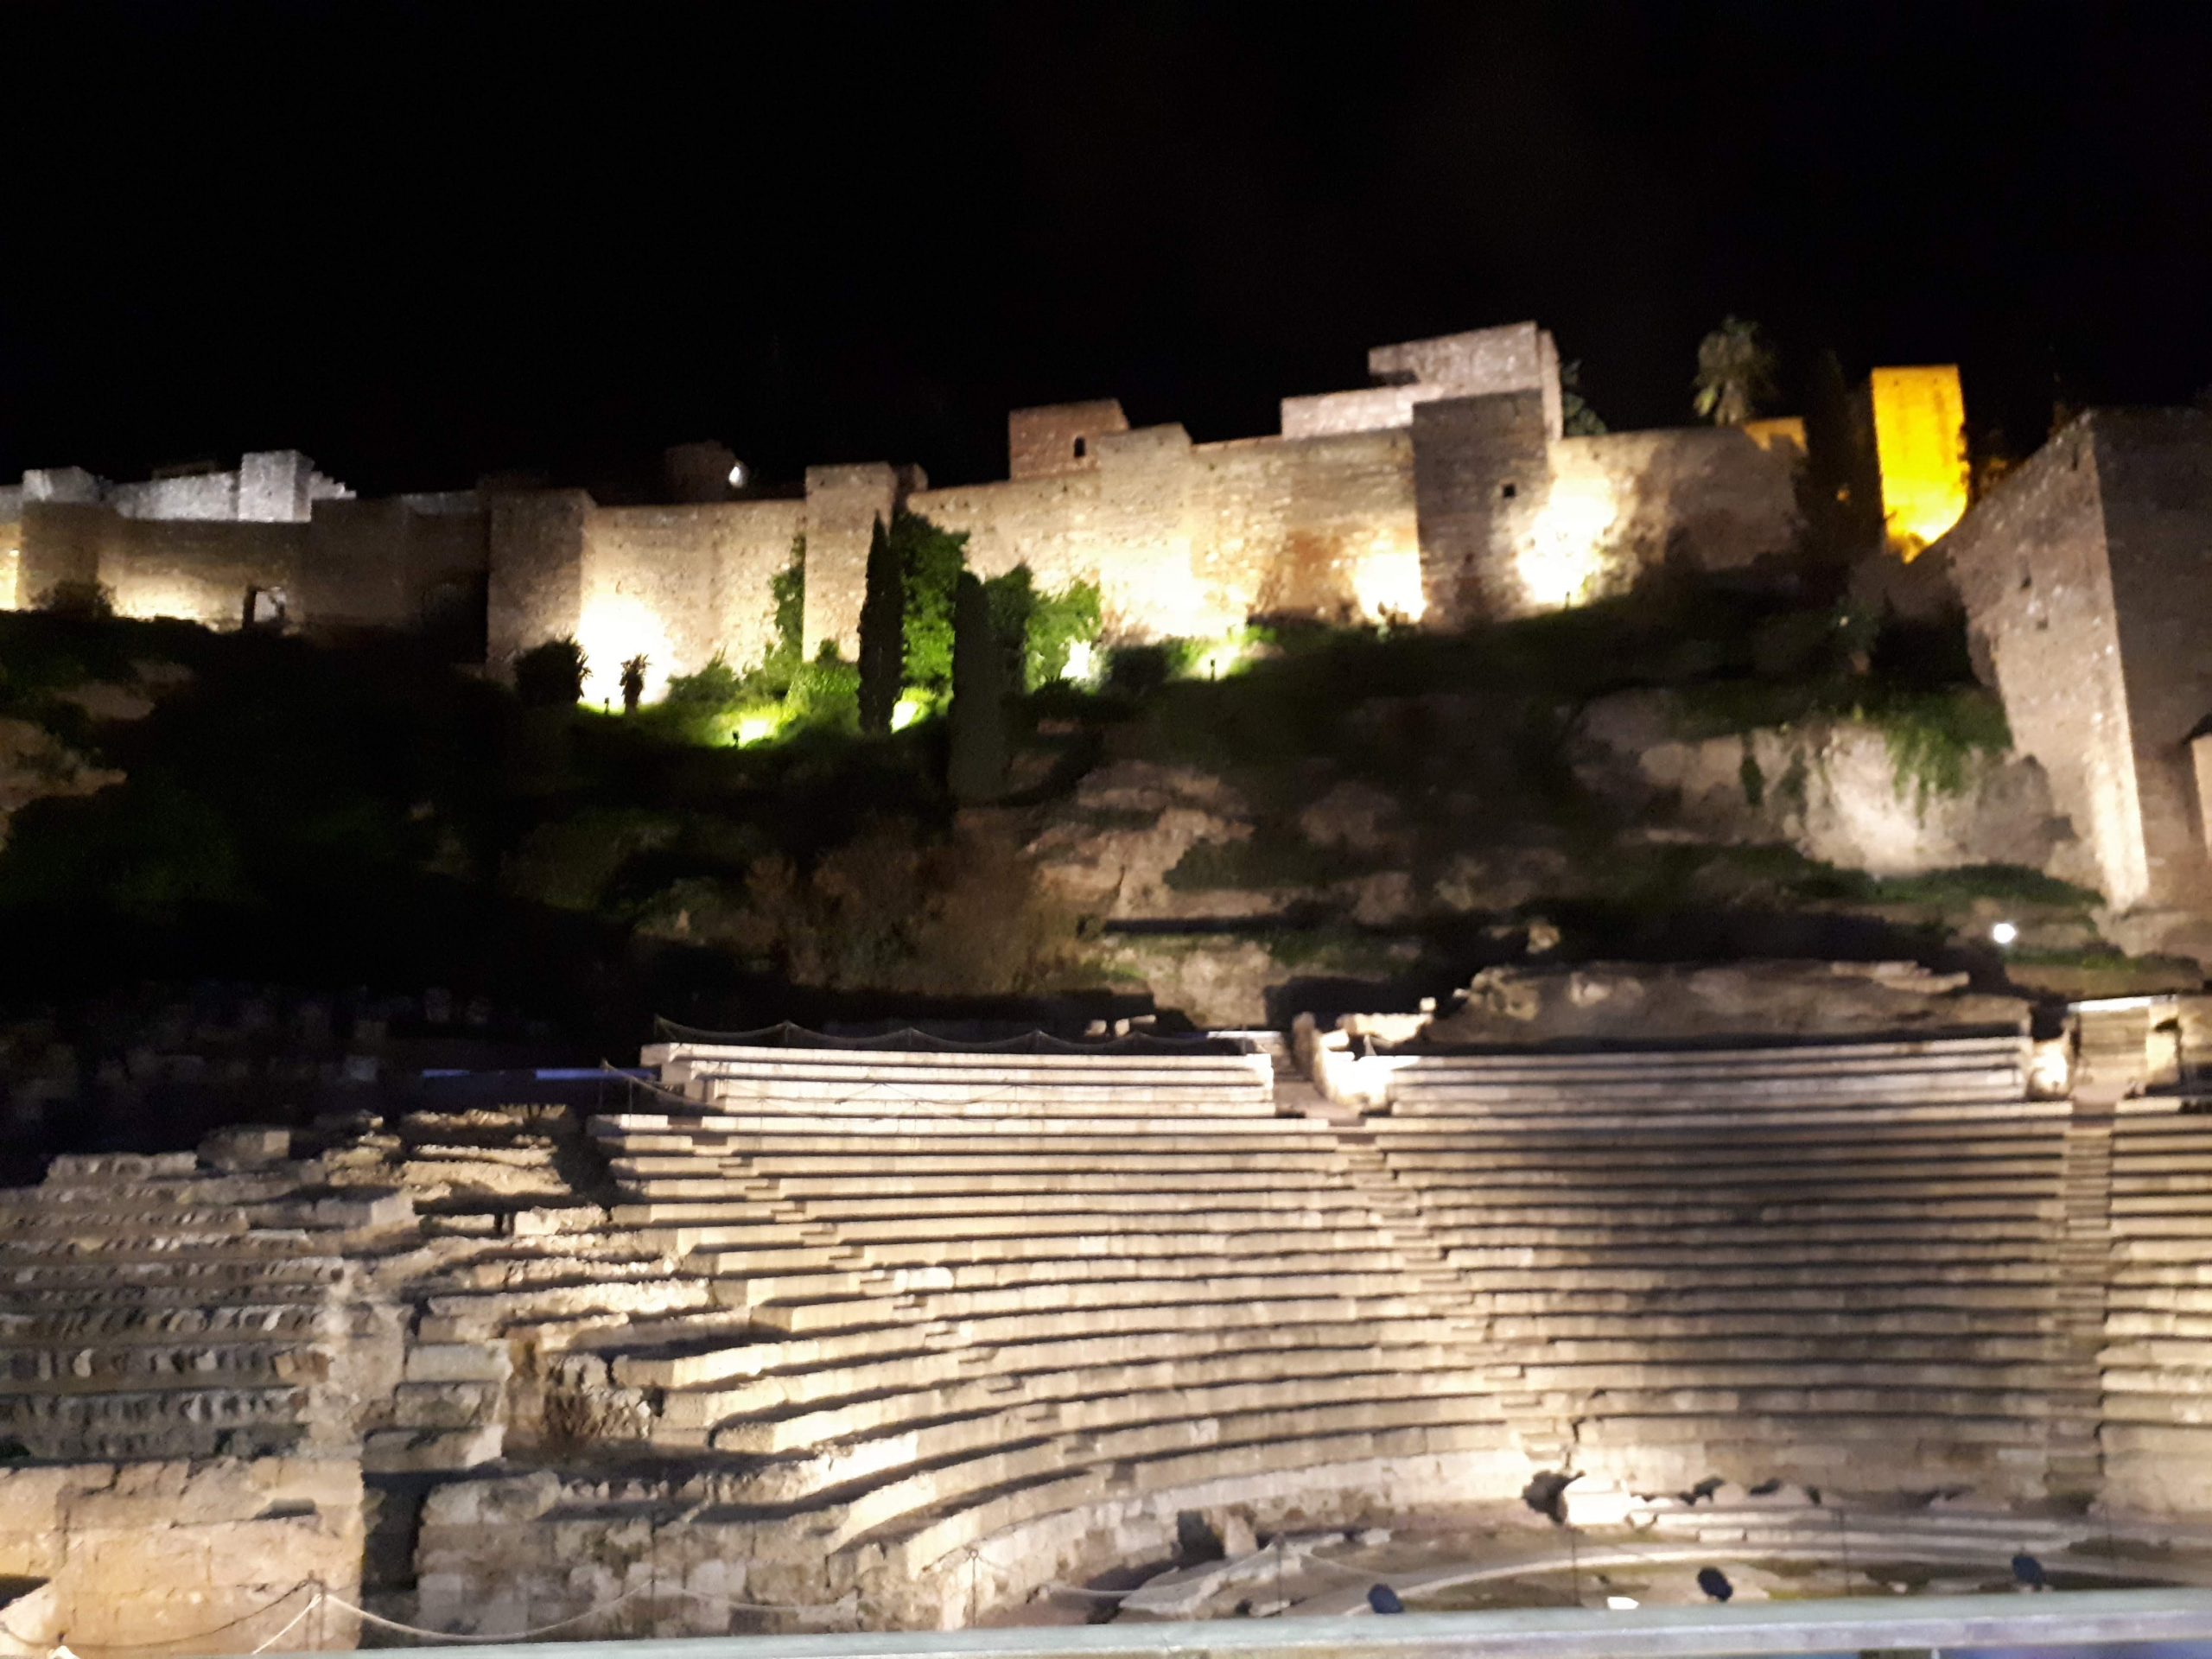 Night view of the Roman Theatre of Malaga